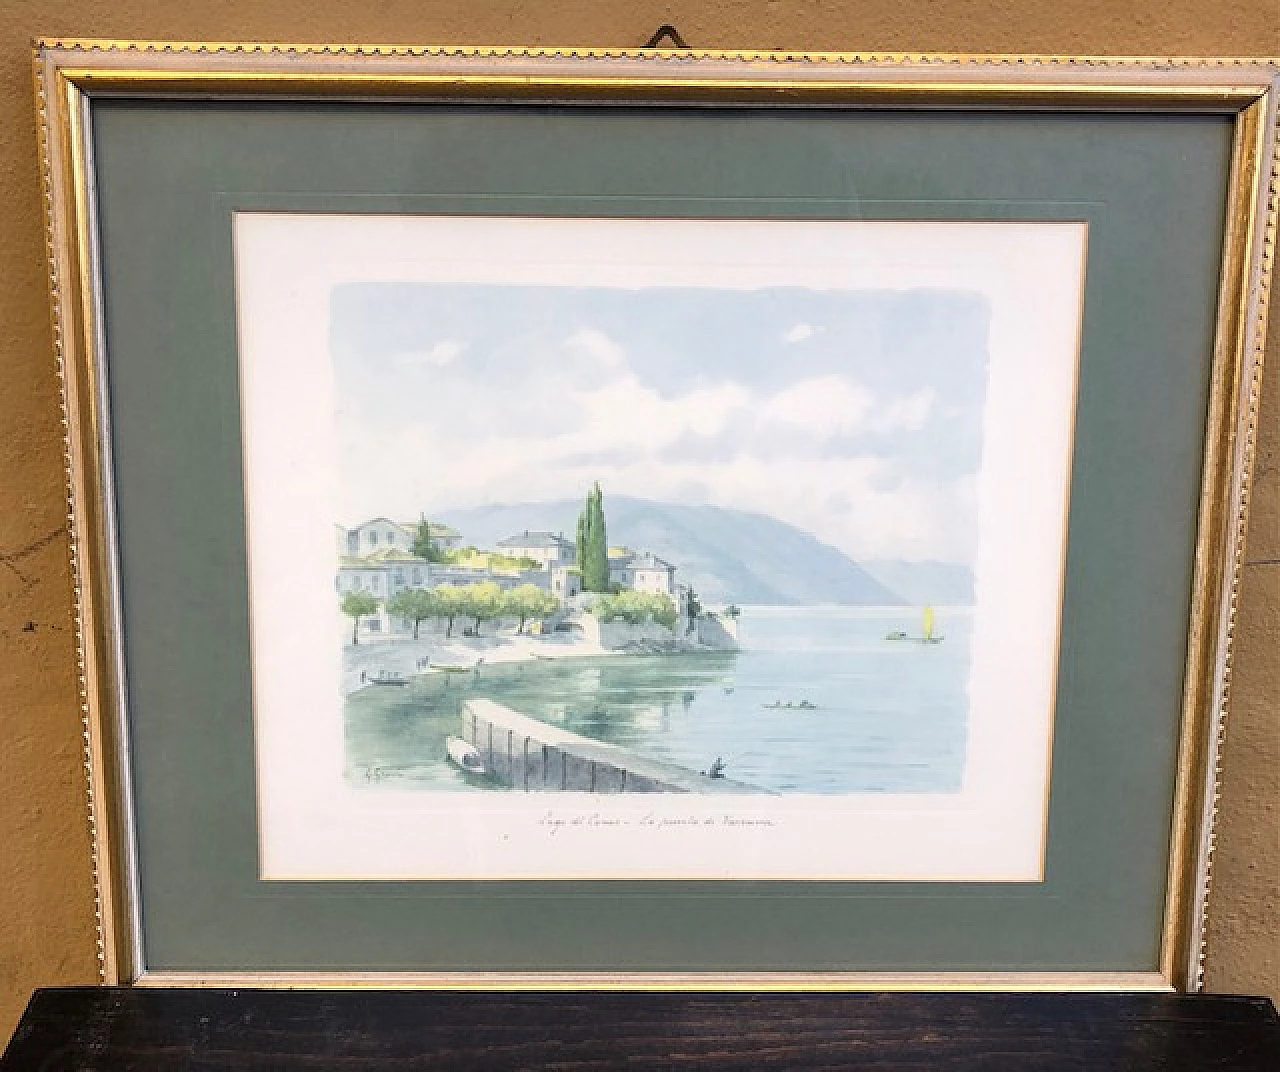 Lake Como - The tip of Varenna, watercolor drawing 1